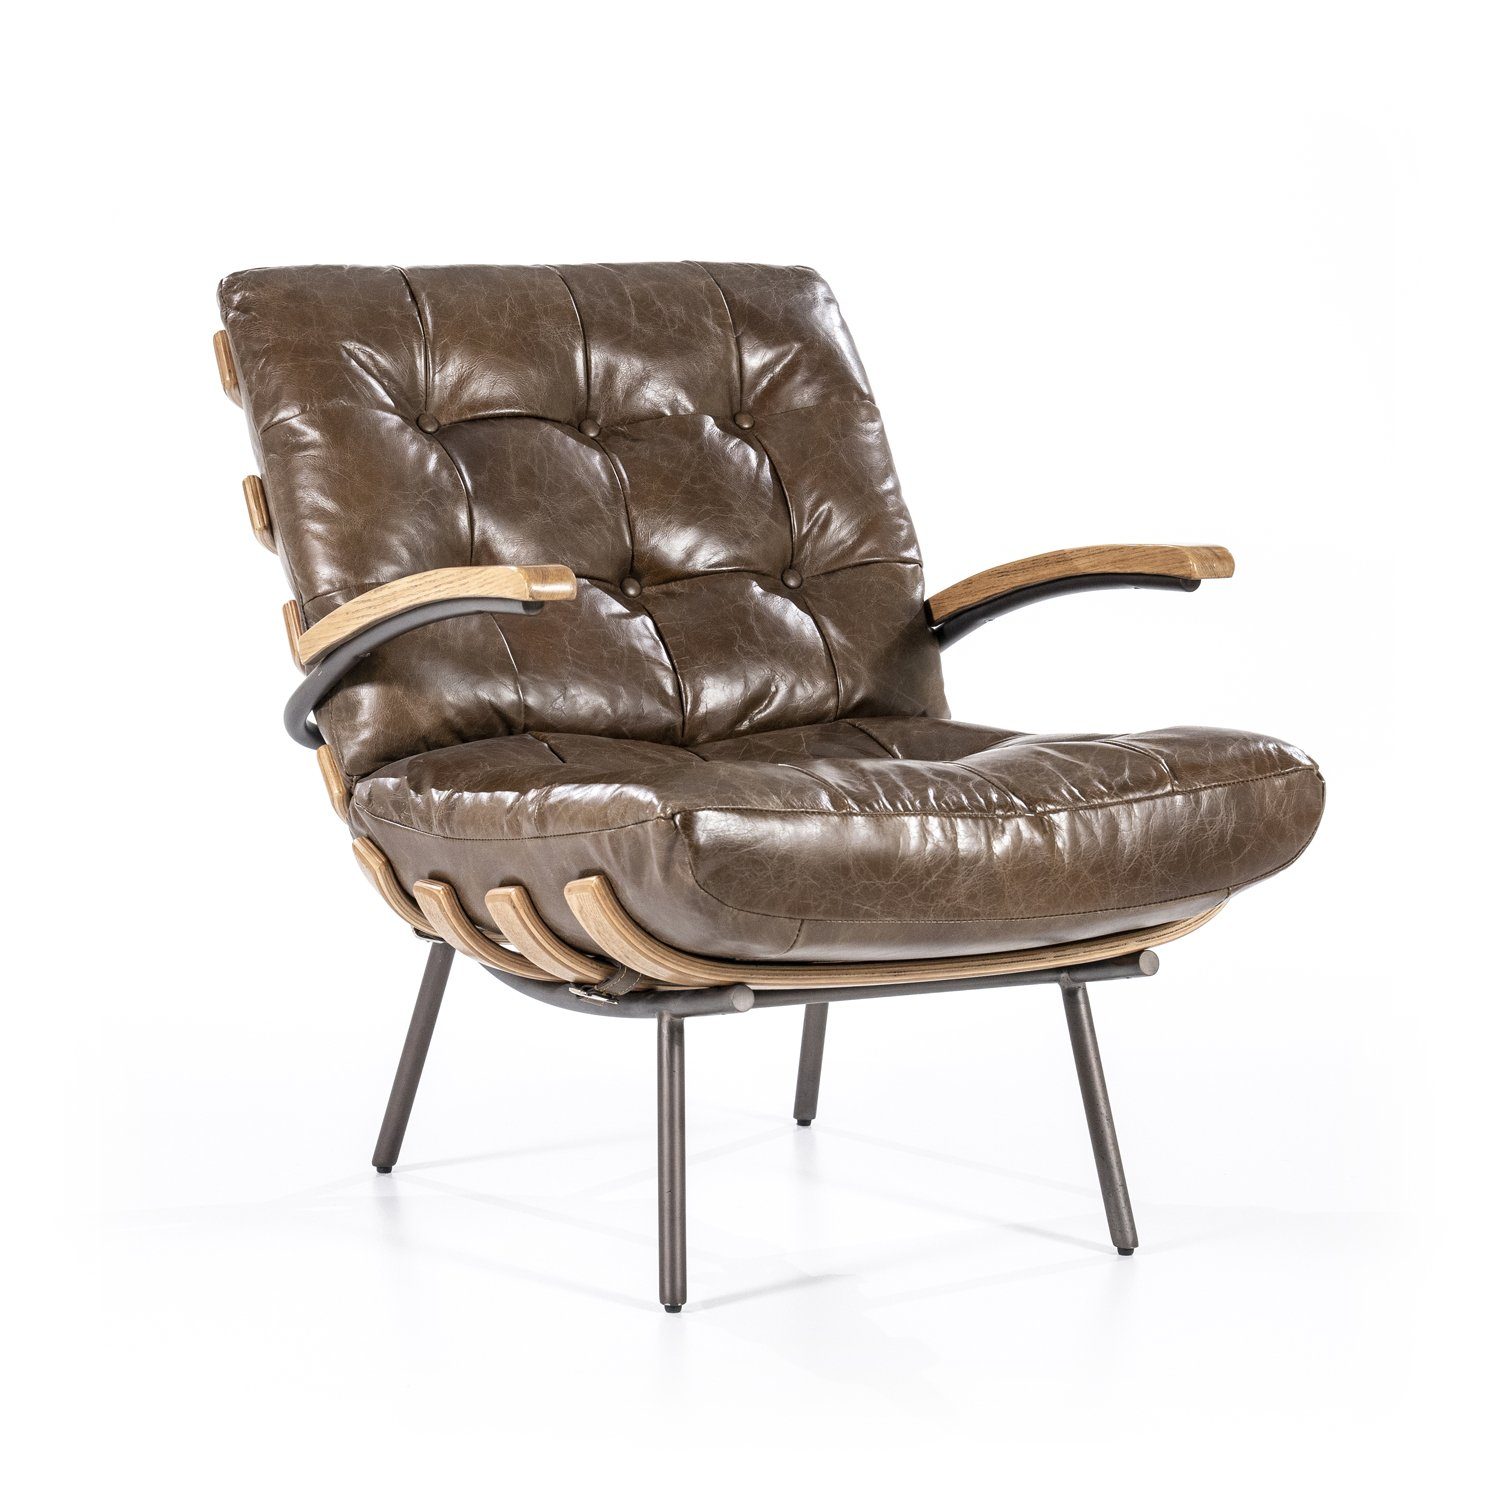 Java-Leder Ledersessel ESTO aus Vintage, hochwertigem Maison dunkelbraun Loungesessel NICOLAS Sessel Leder